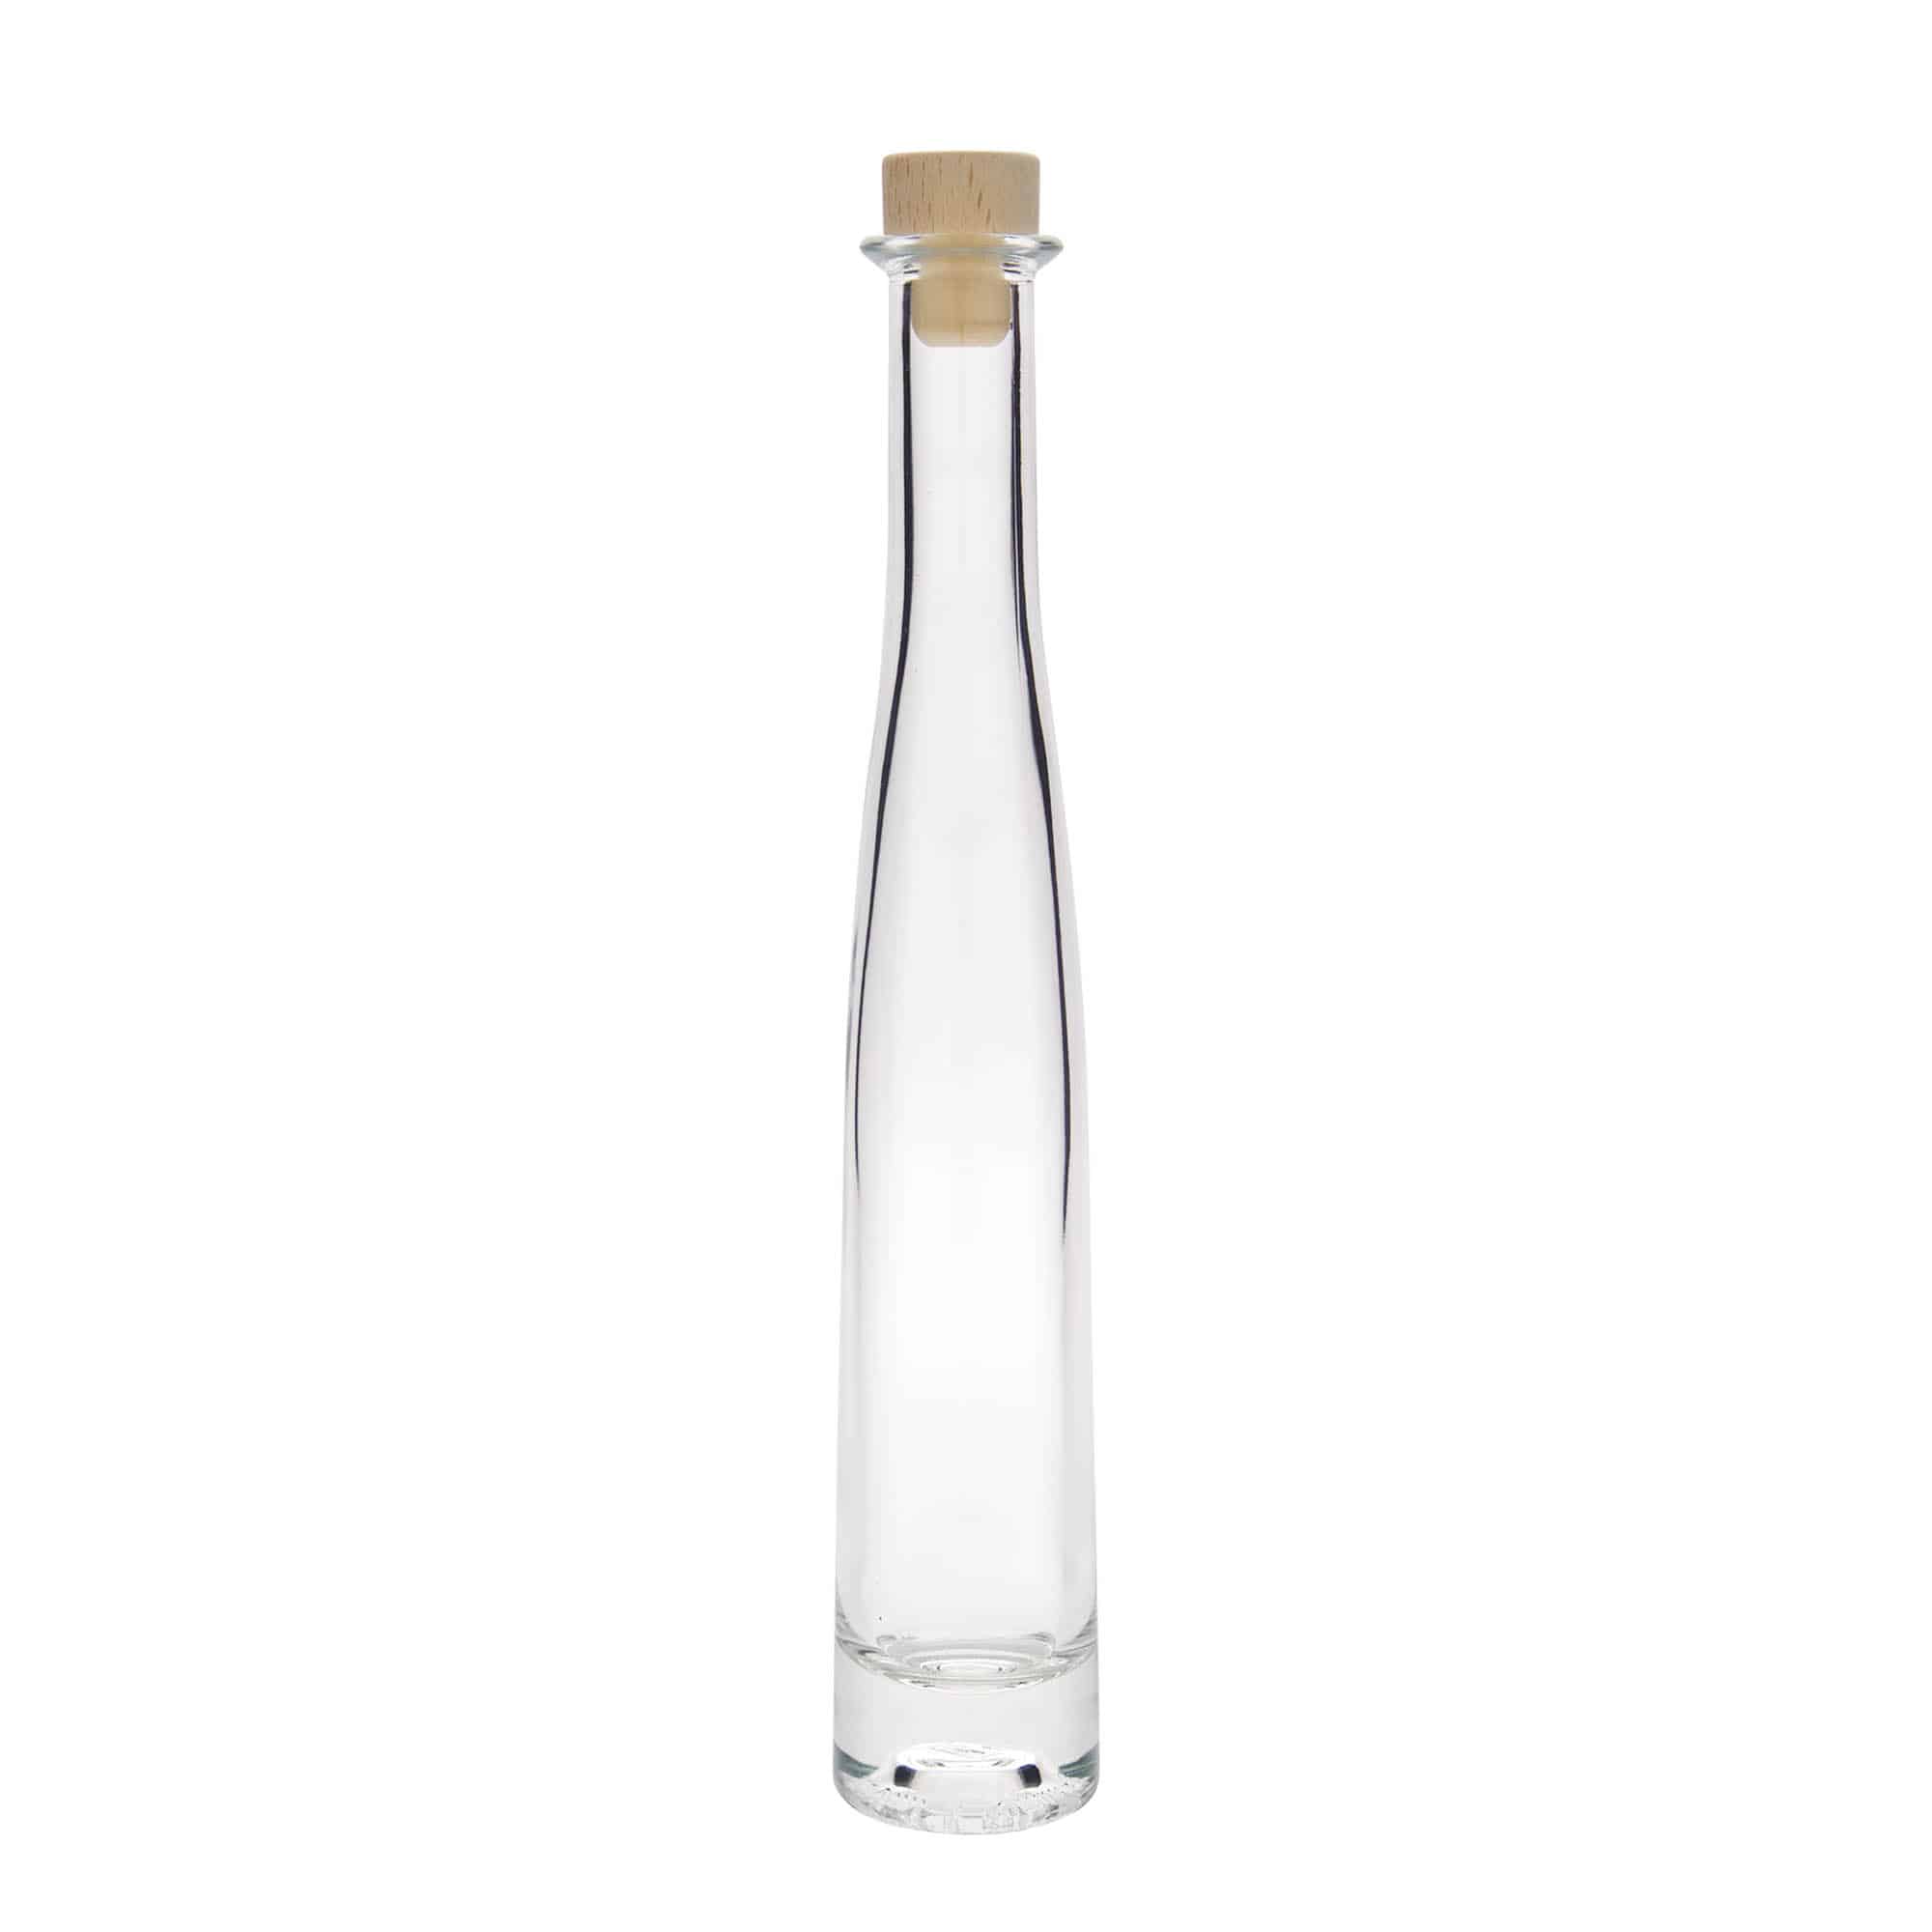 200 ml glass bottle 'Renana Futura', closure: cork